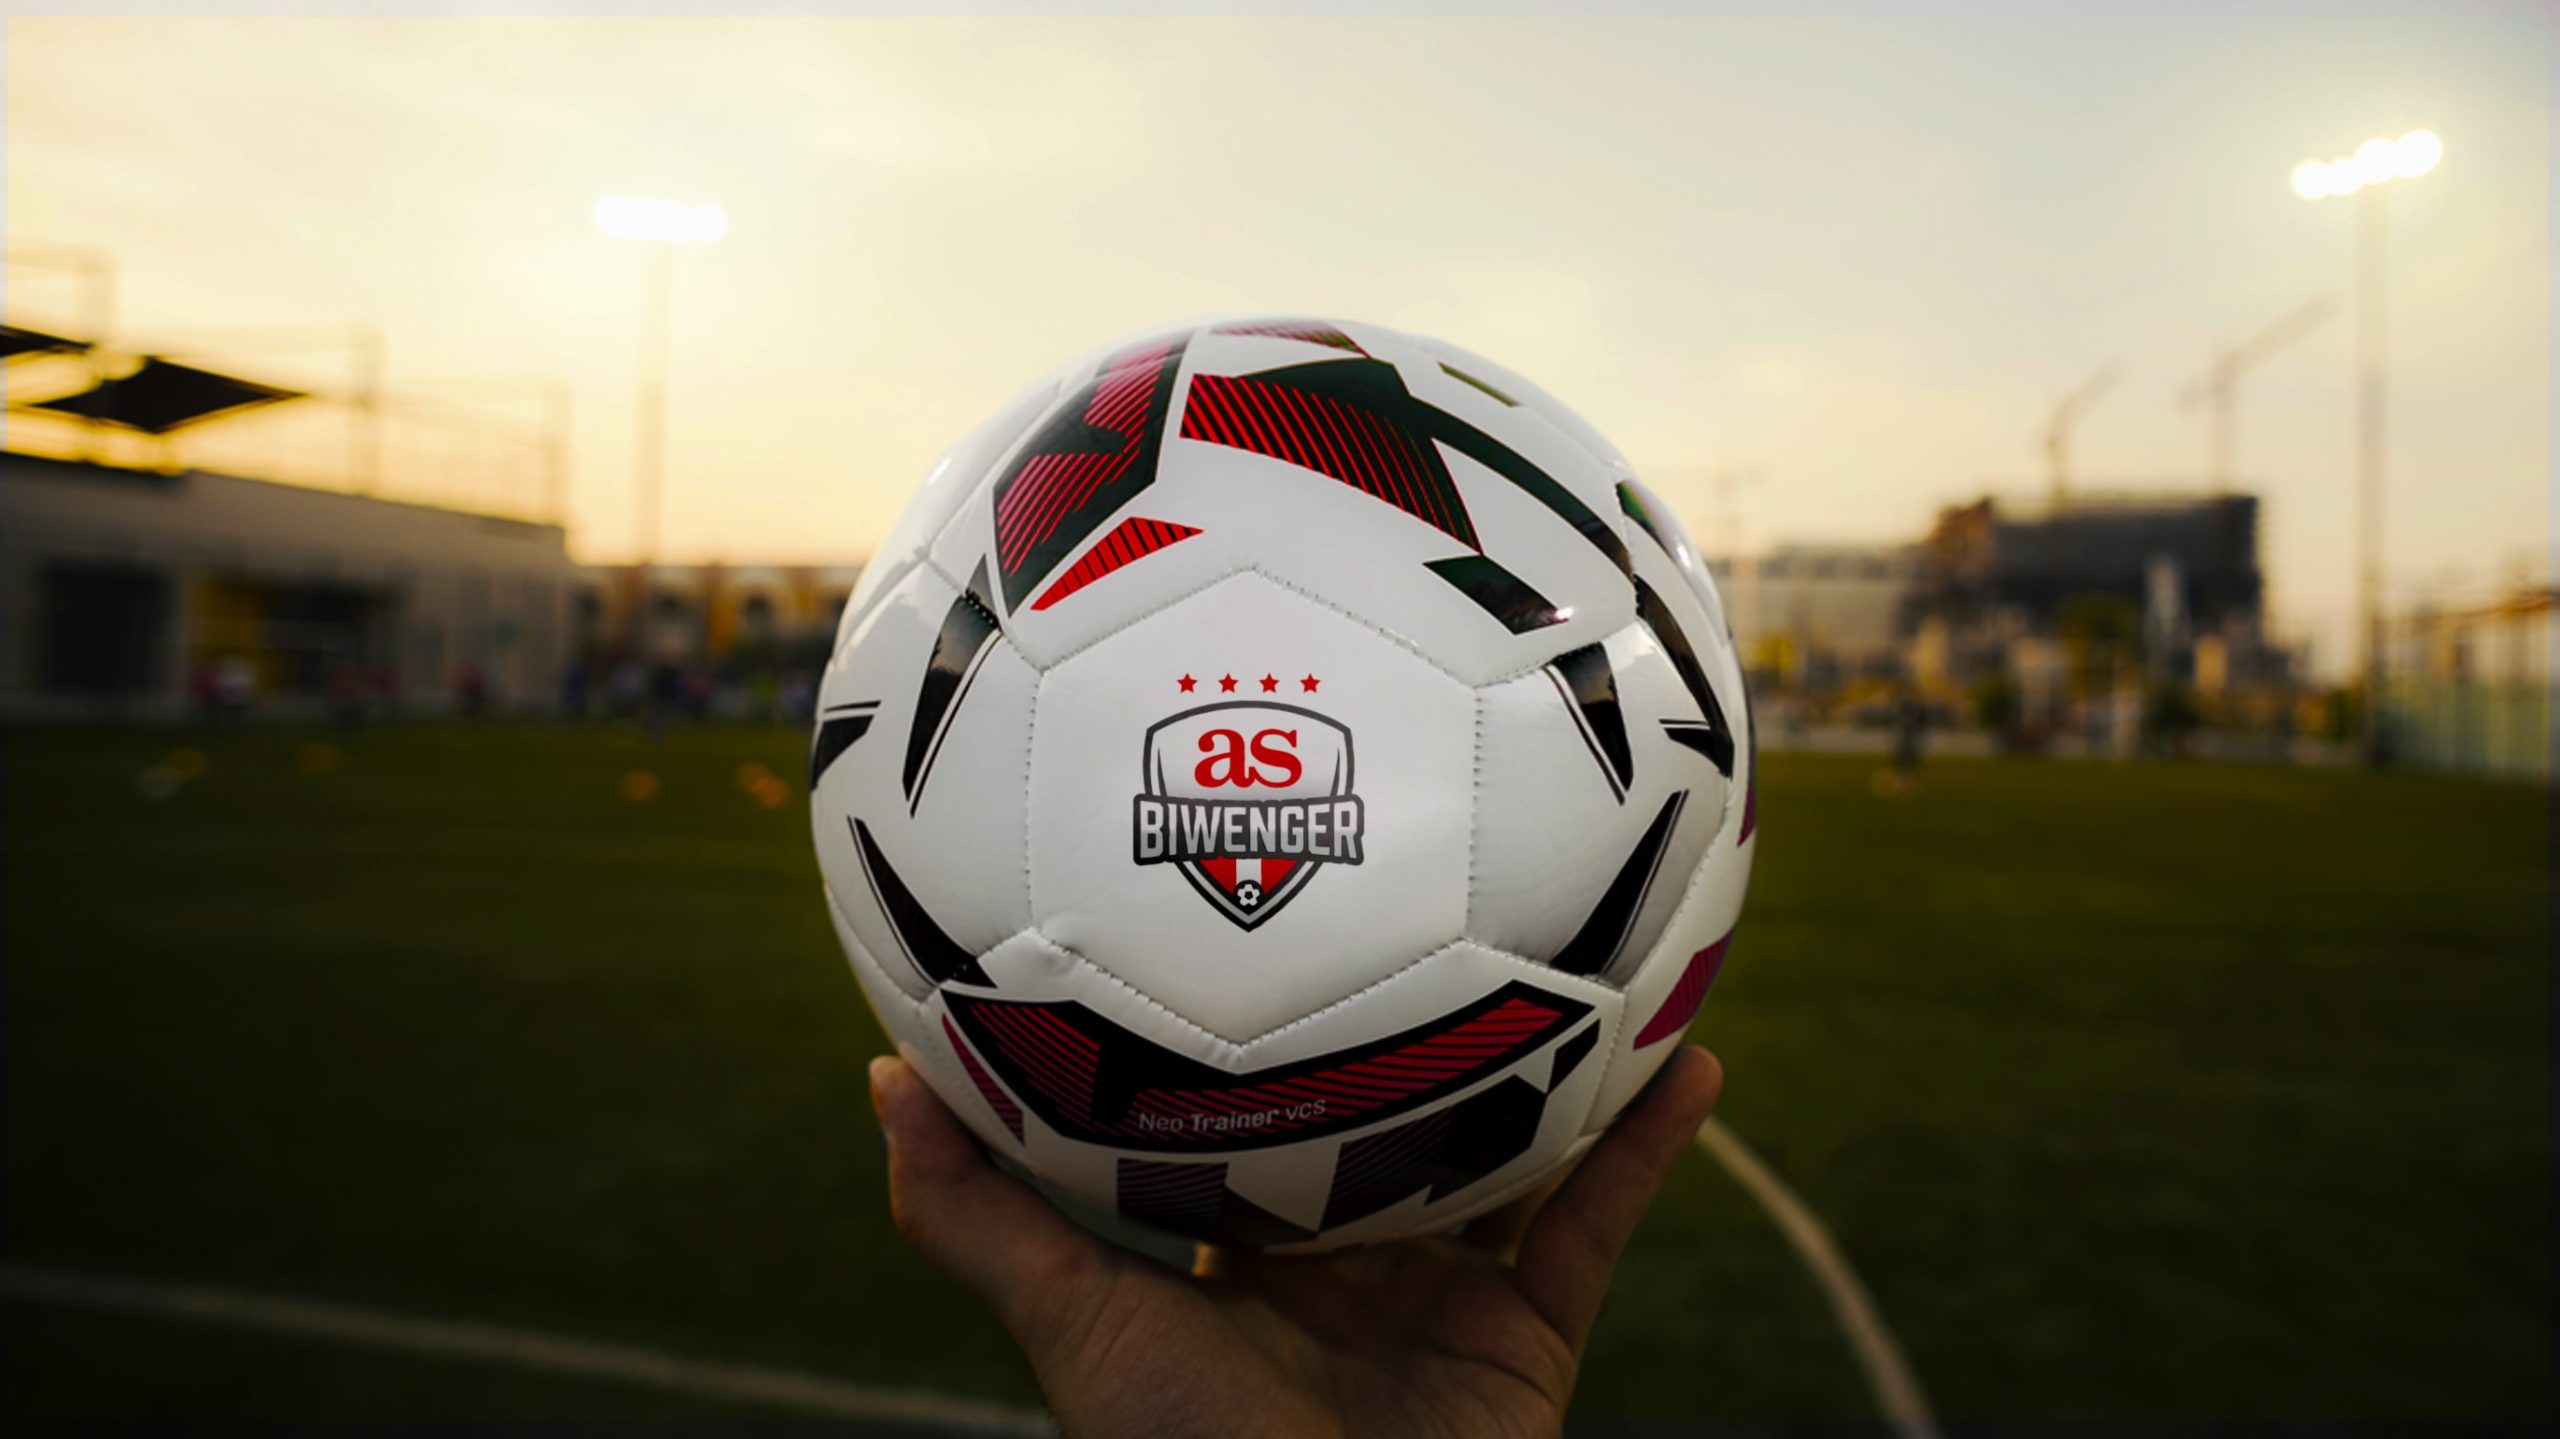 Balón de fútbol con el logotipo de As Biwenger